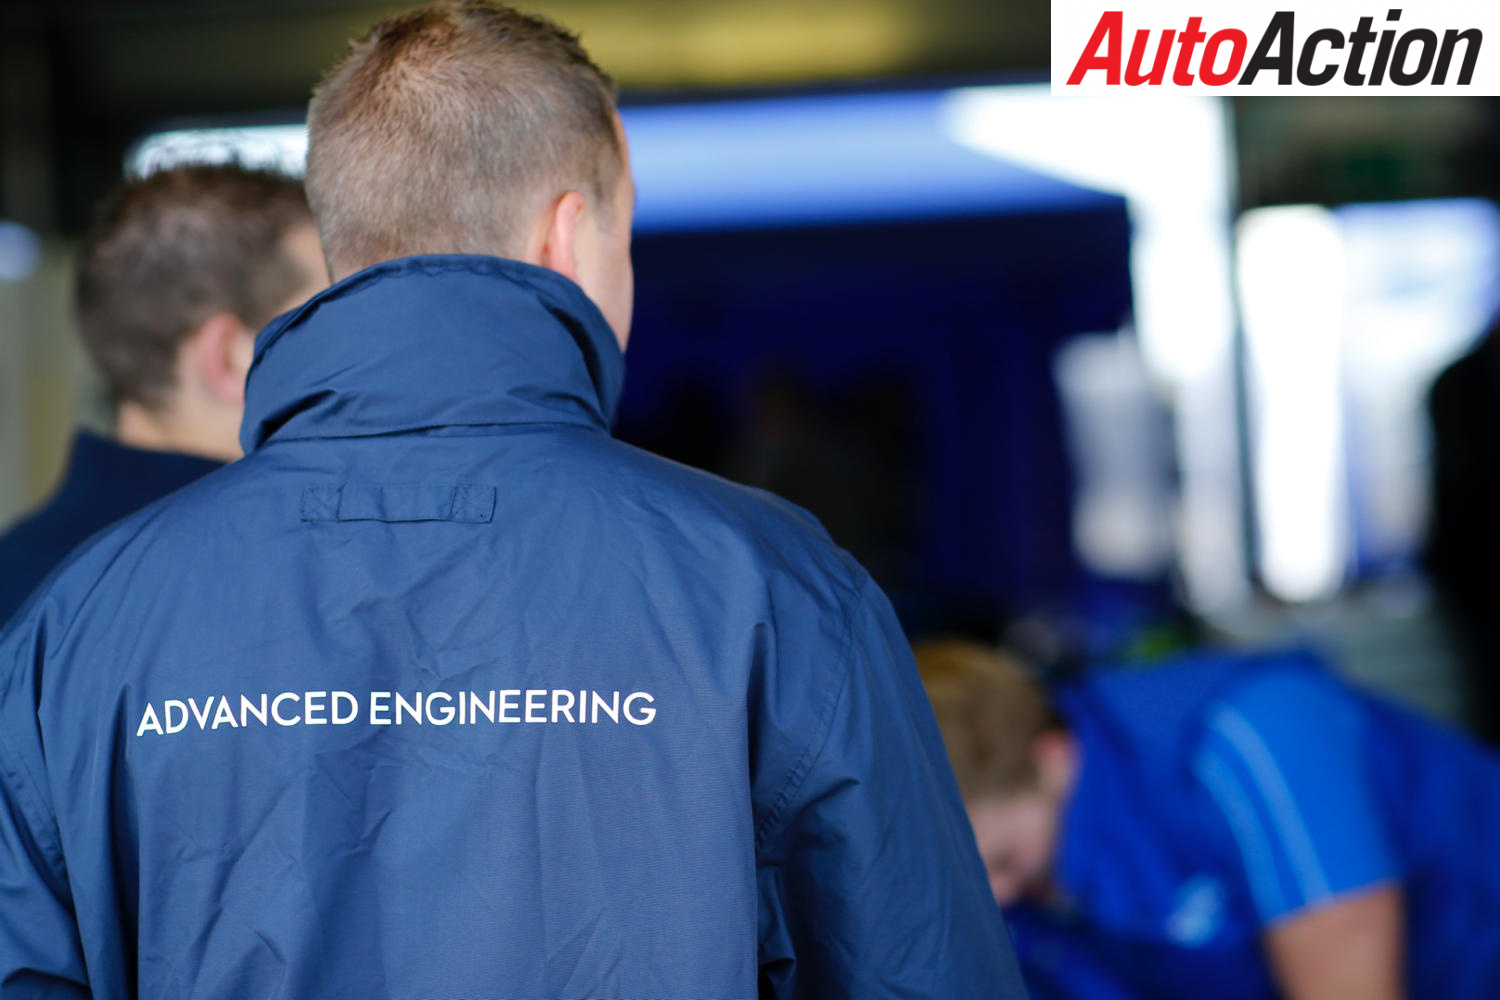 Aussie acquires Williams Engineering business - Image: Motorsport Images